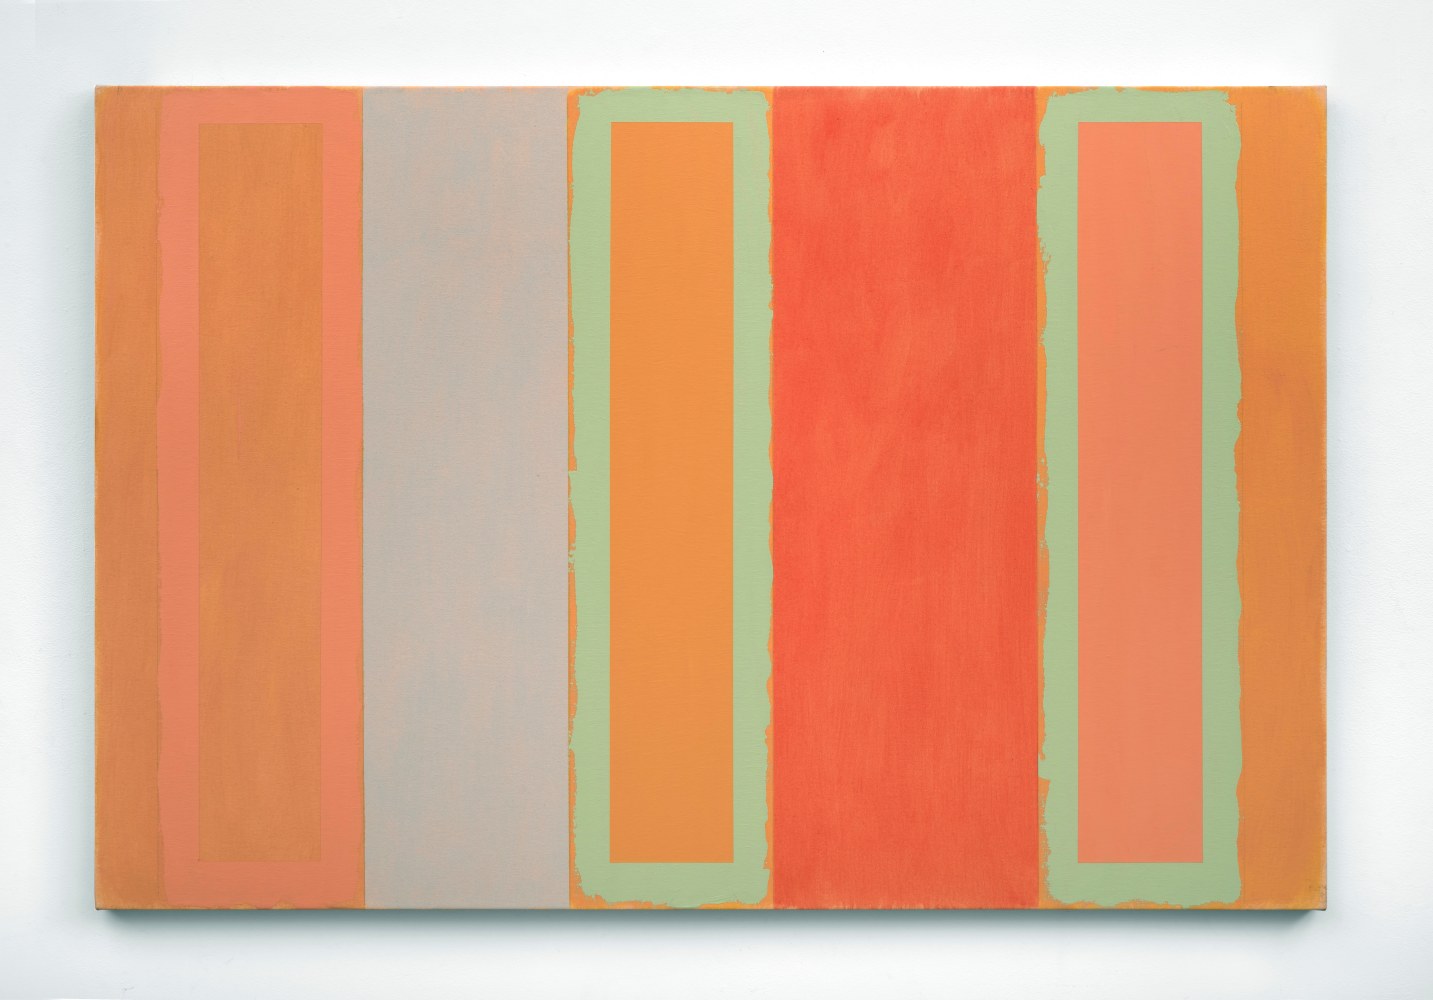 Doug Ohlson (1936-2010), Light Lock, 2006, acrylic on canvas, 40 x 60 inches; 101.6 x 152.4 centimeters, LSFA #13151